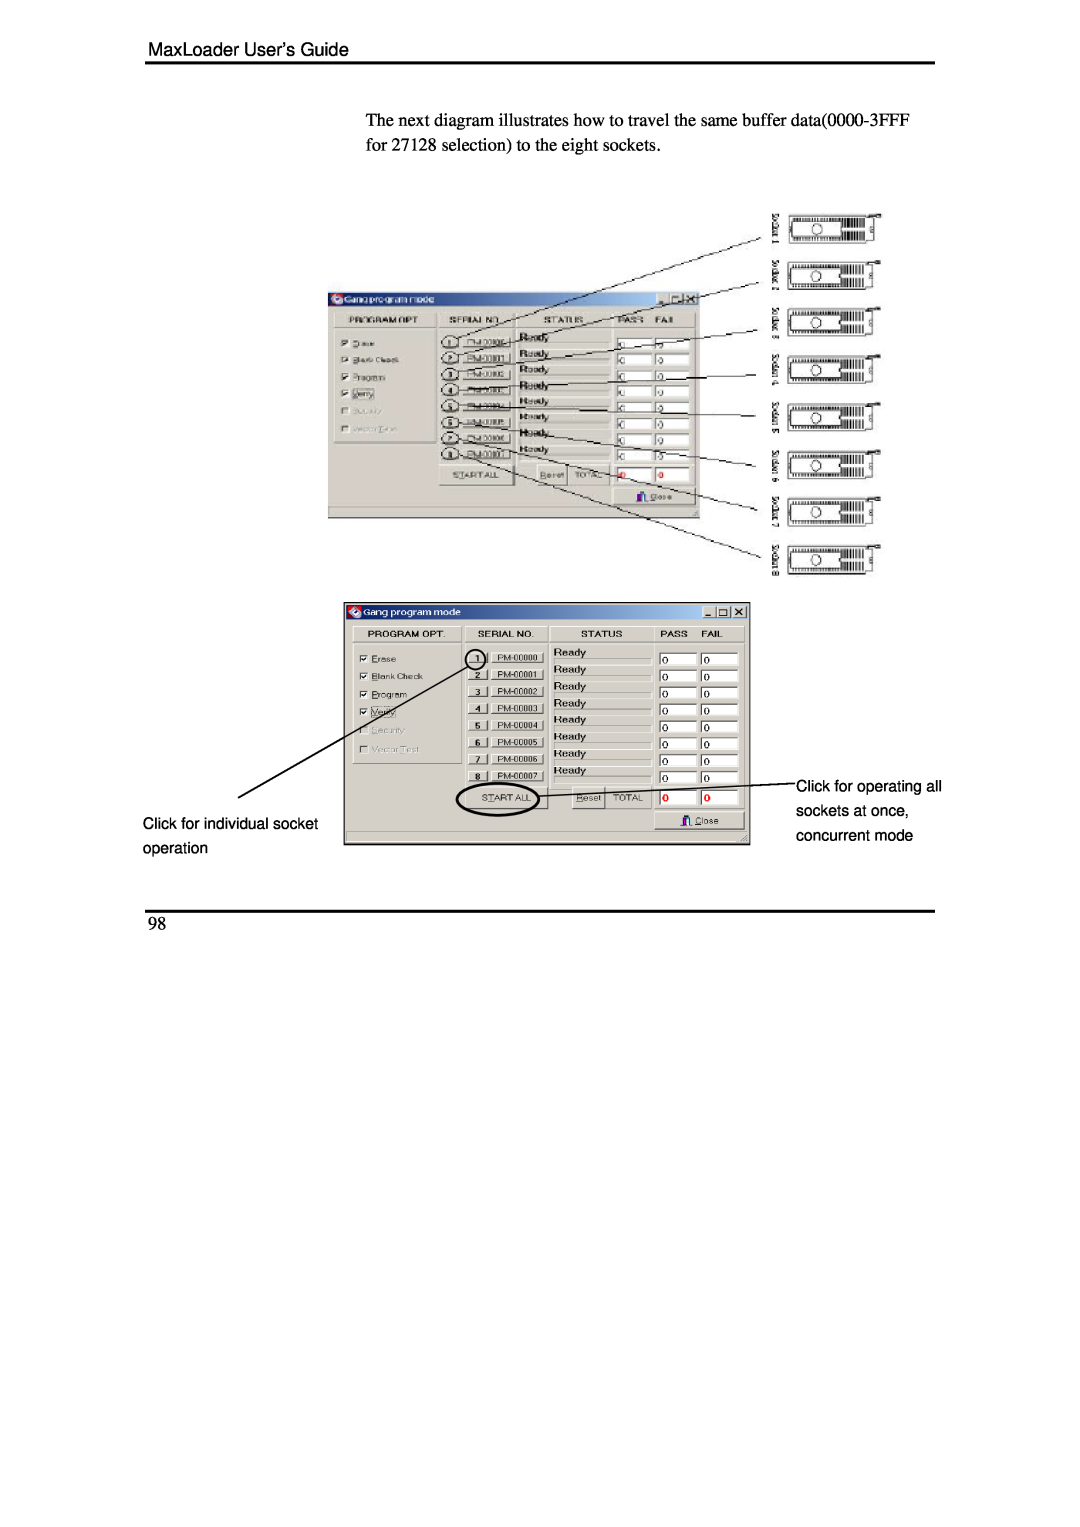 IBM manual Click for individual socket operation, MaxLoader User’s Guide 